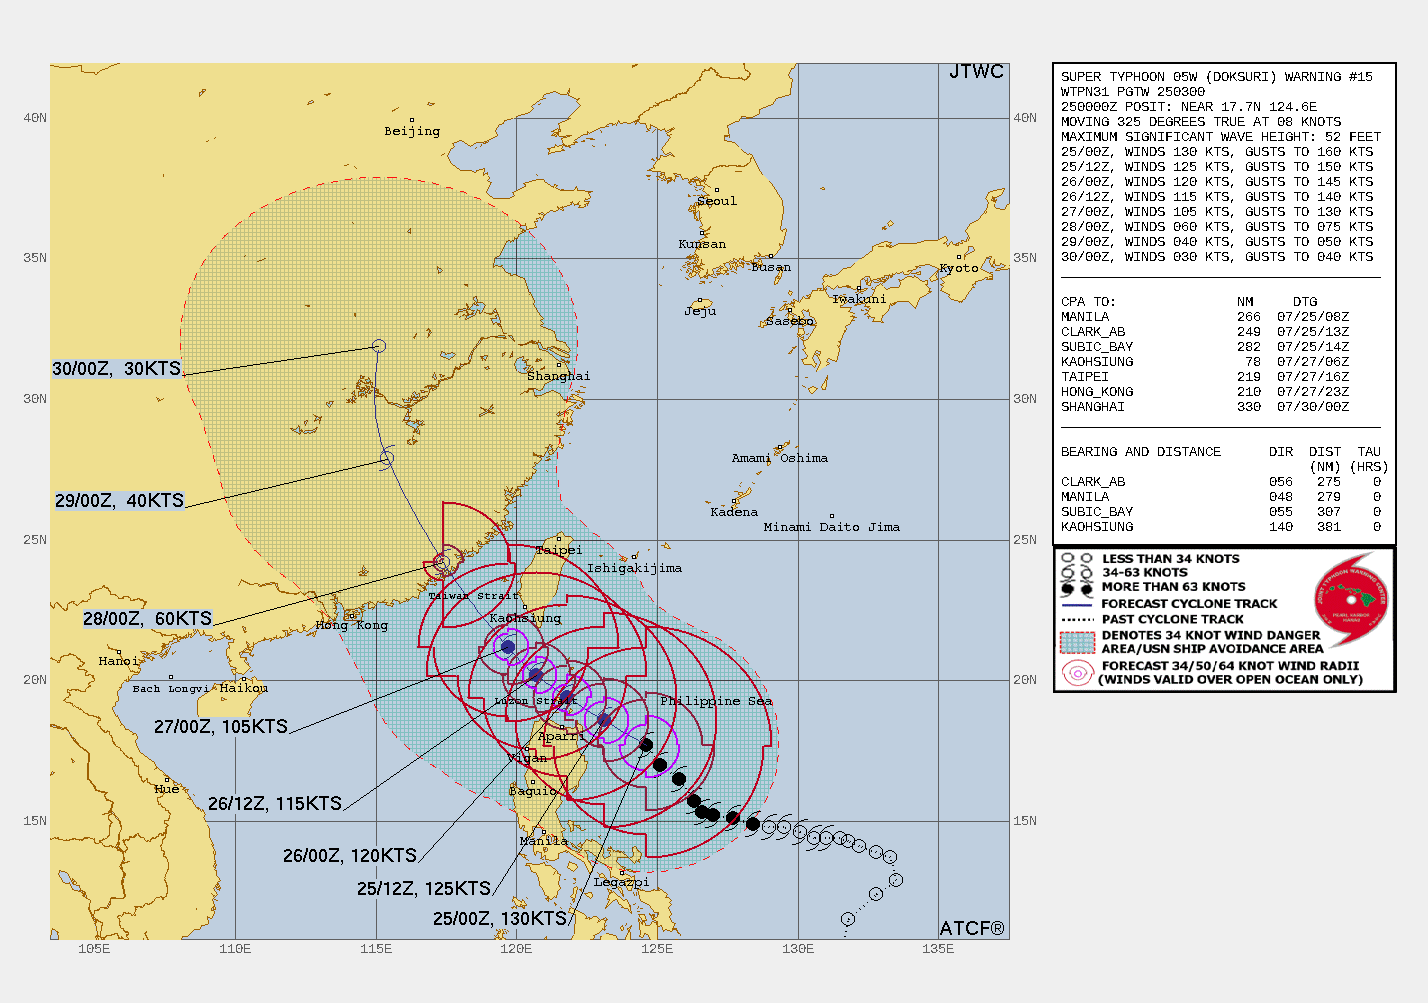 Taiwan issues land warning for Super Typhoon Doksuri